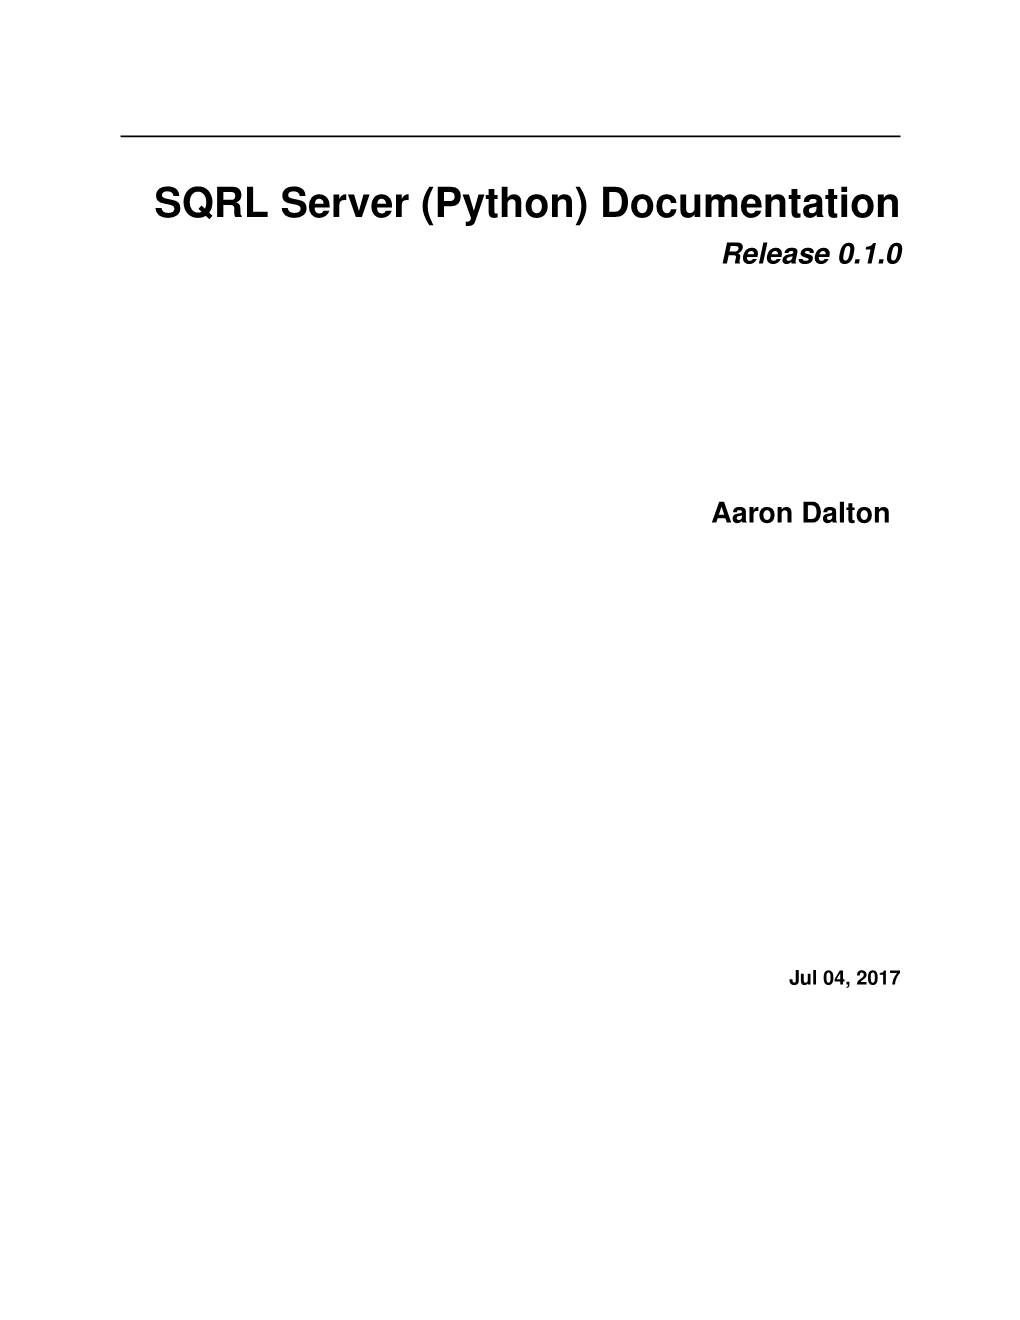 SQRL Server (Python) Documentation Release 0.1.0